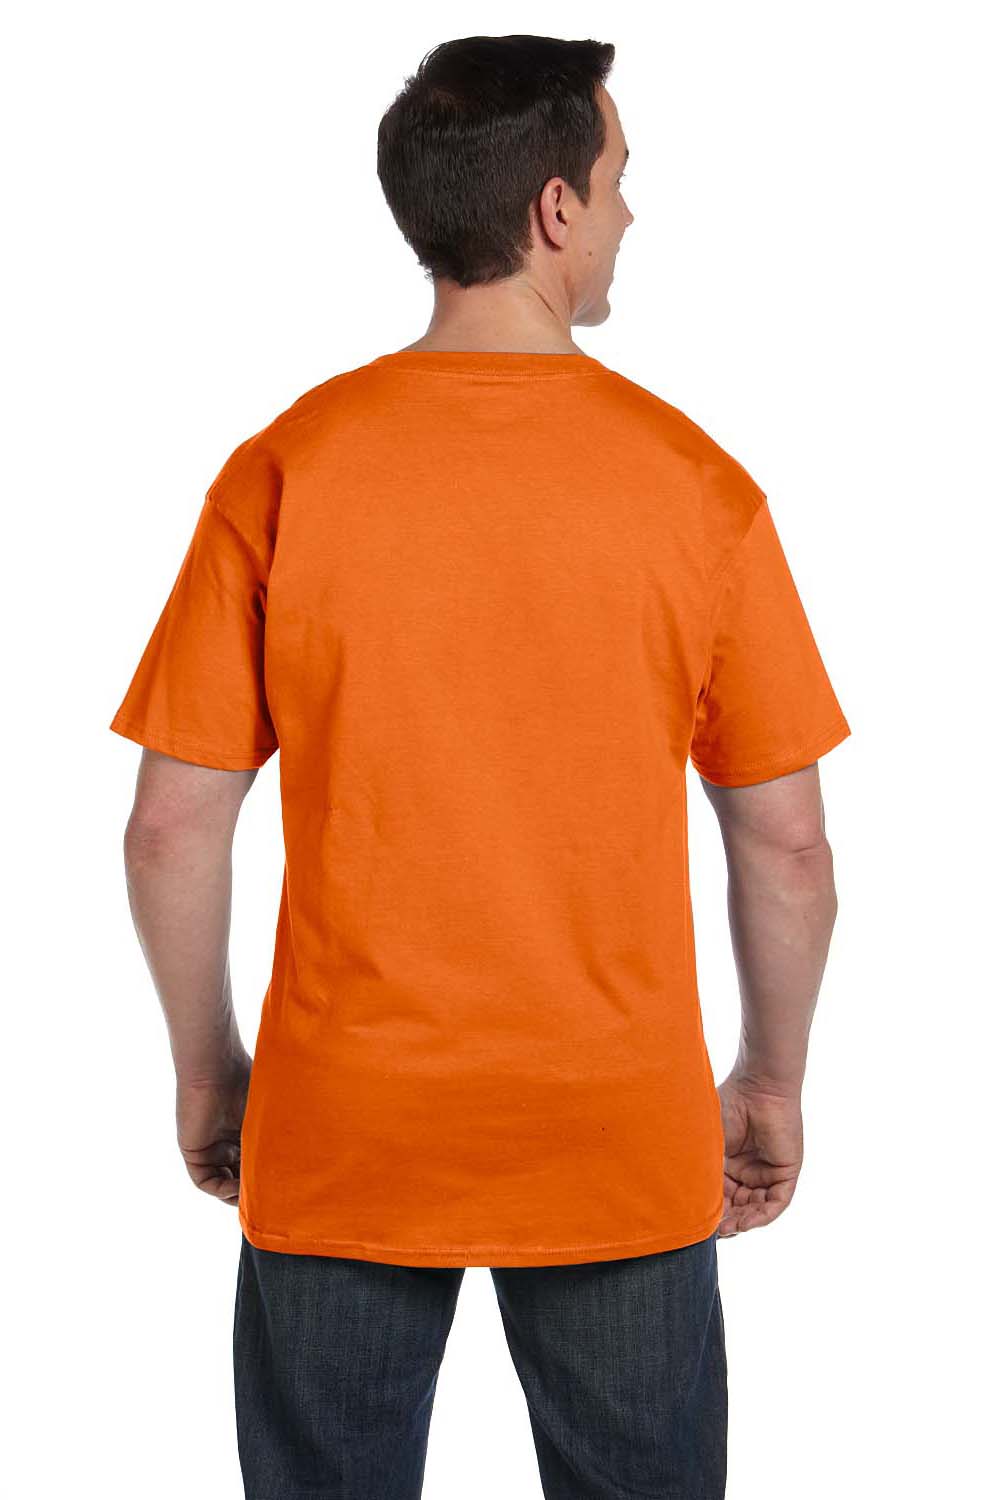 Hanes 5190P Mens Beefy-T Short Sleeve Crewneck T-Shirt w/ Pocket Orange Back